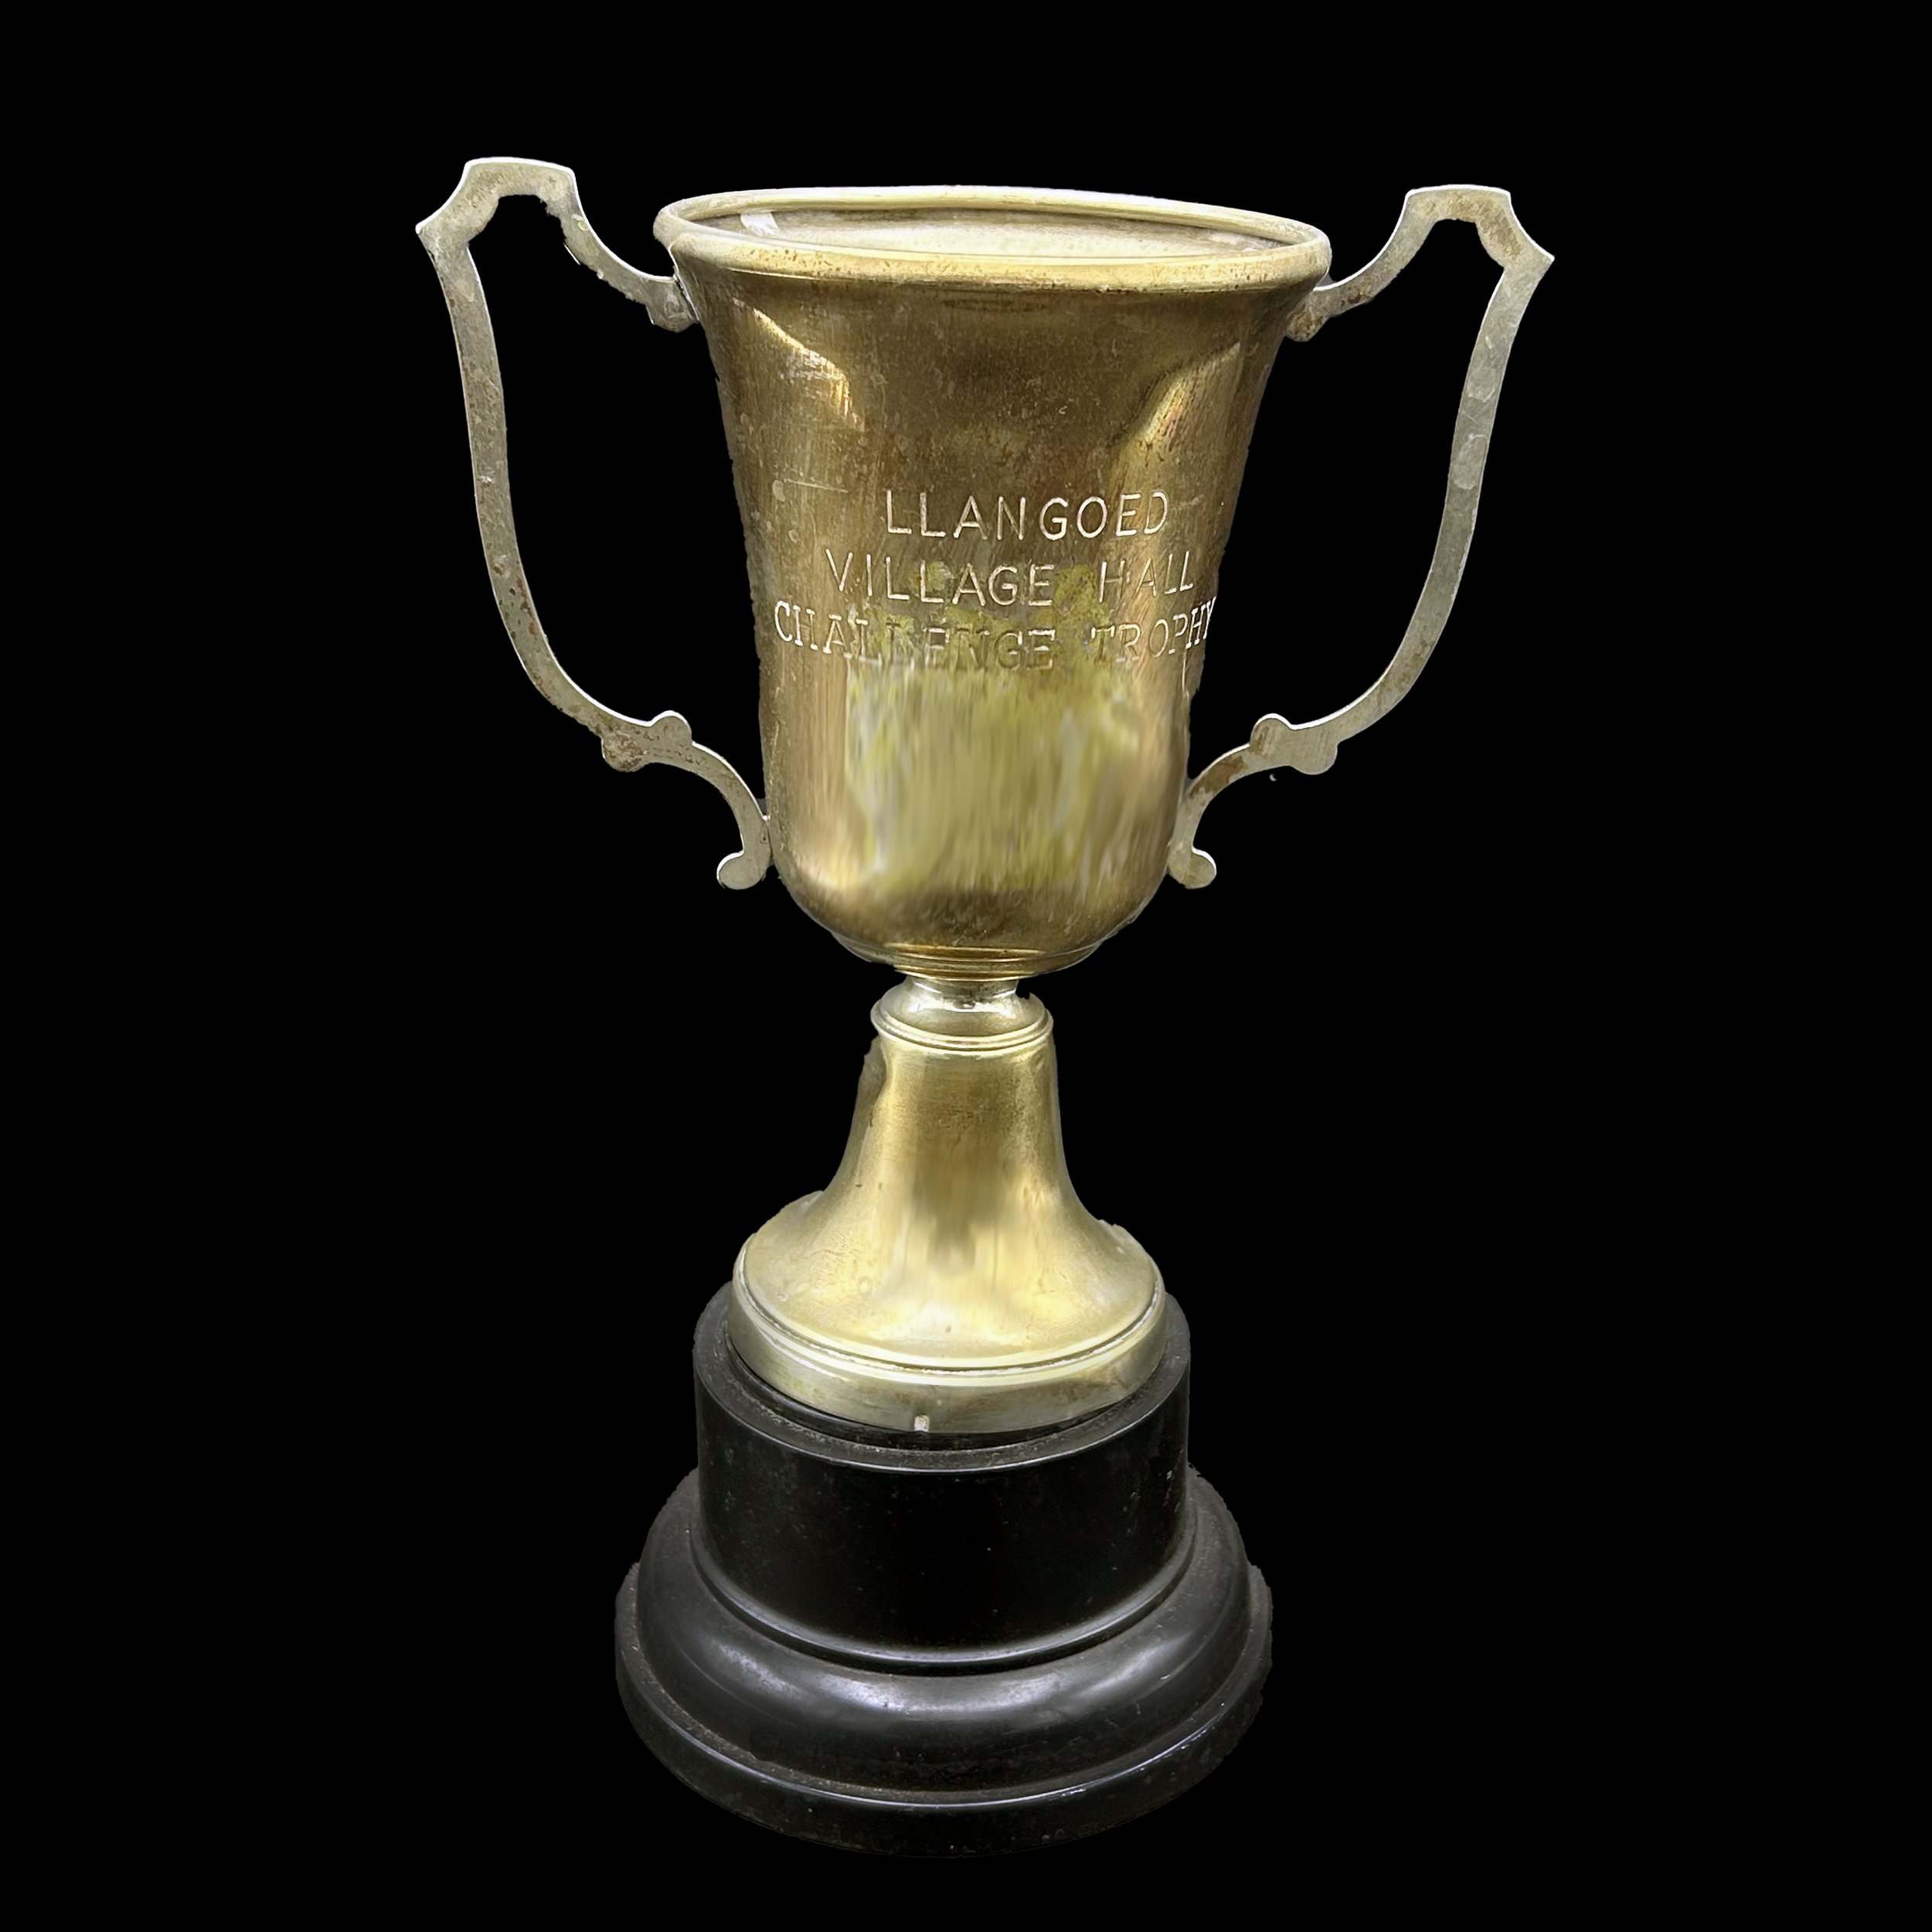 Llangoed Village Hall Challenge Trophy